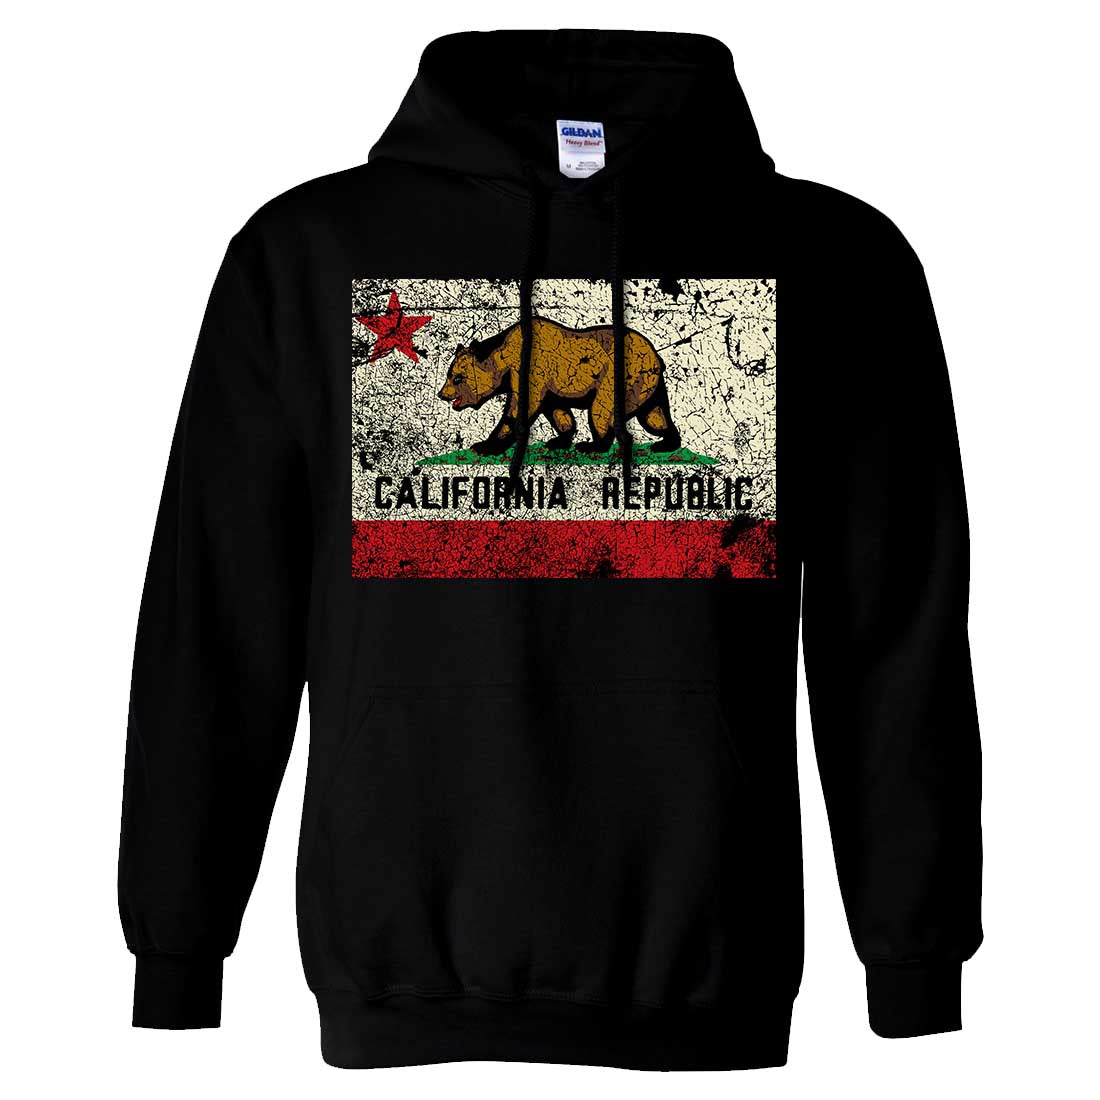 Hoodies - Men's Unisex Sweatshirts - California Republic Clothes